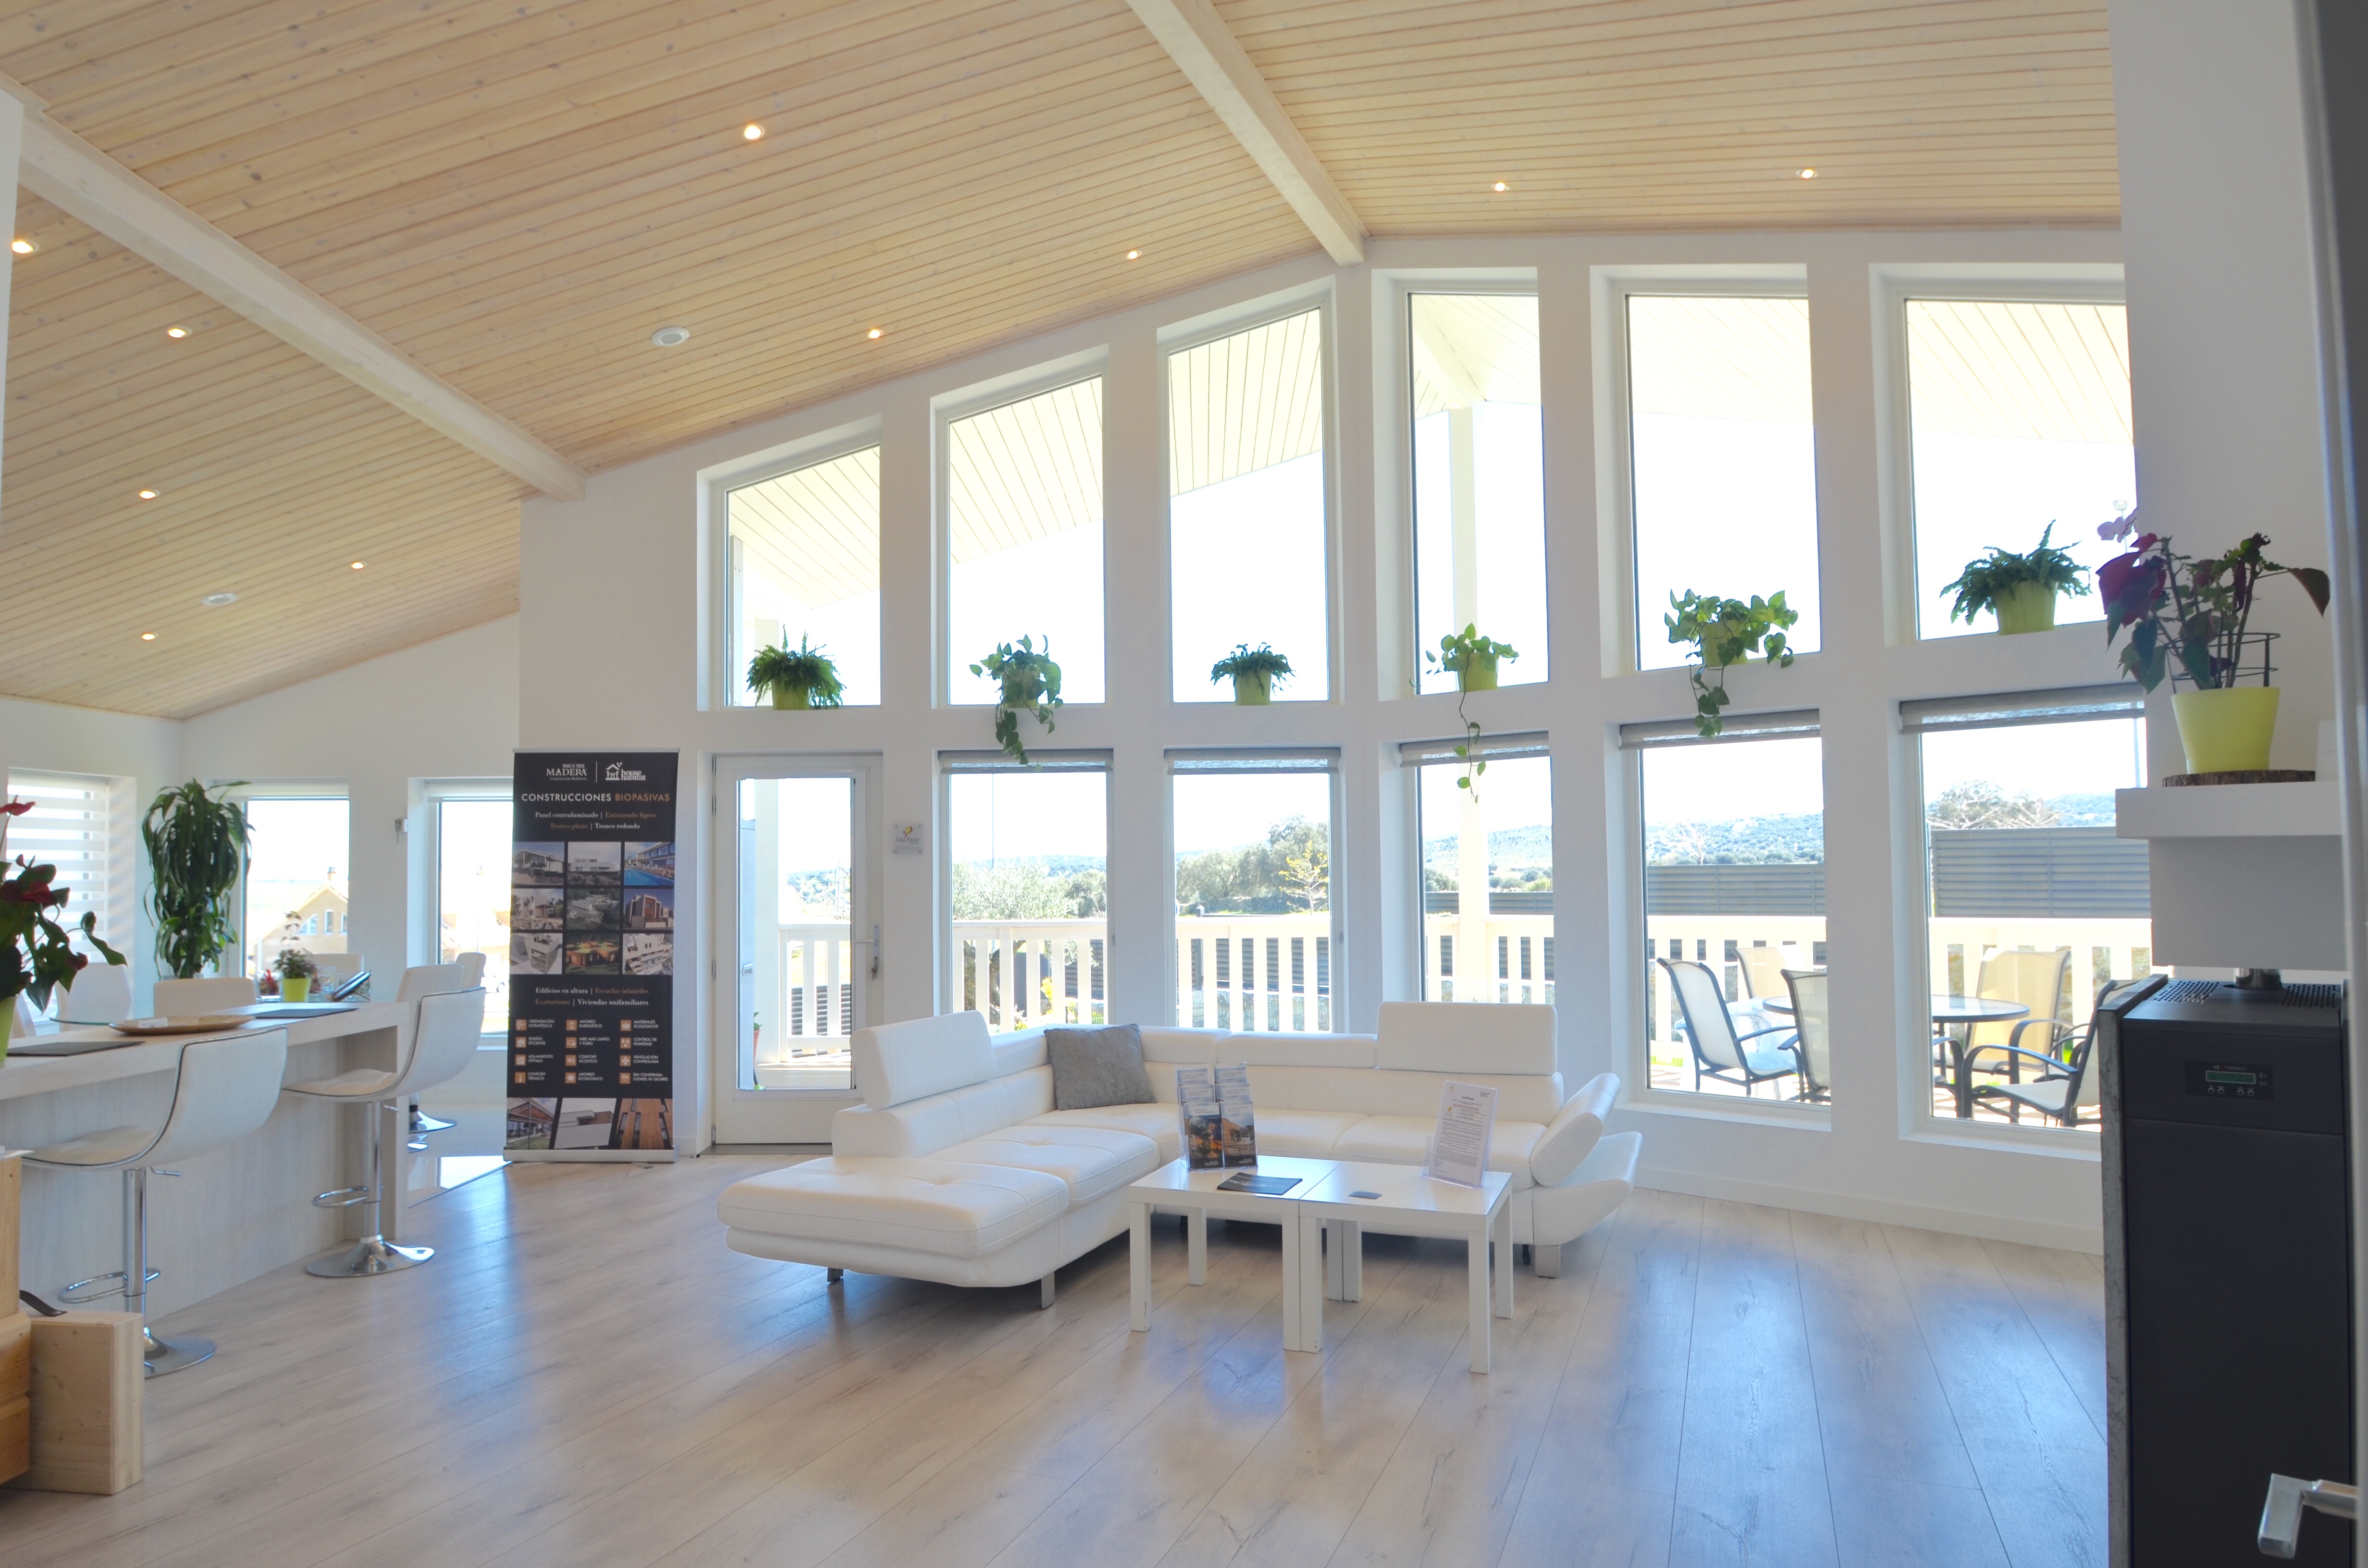 Interior Oficina 100x100 madera con ventana madera V92 en Blanco